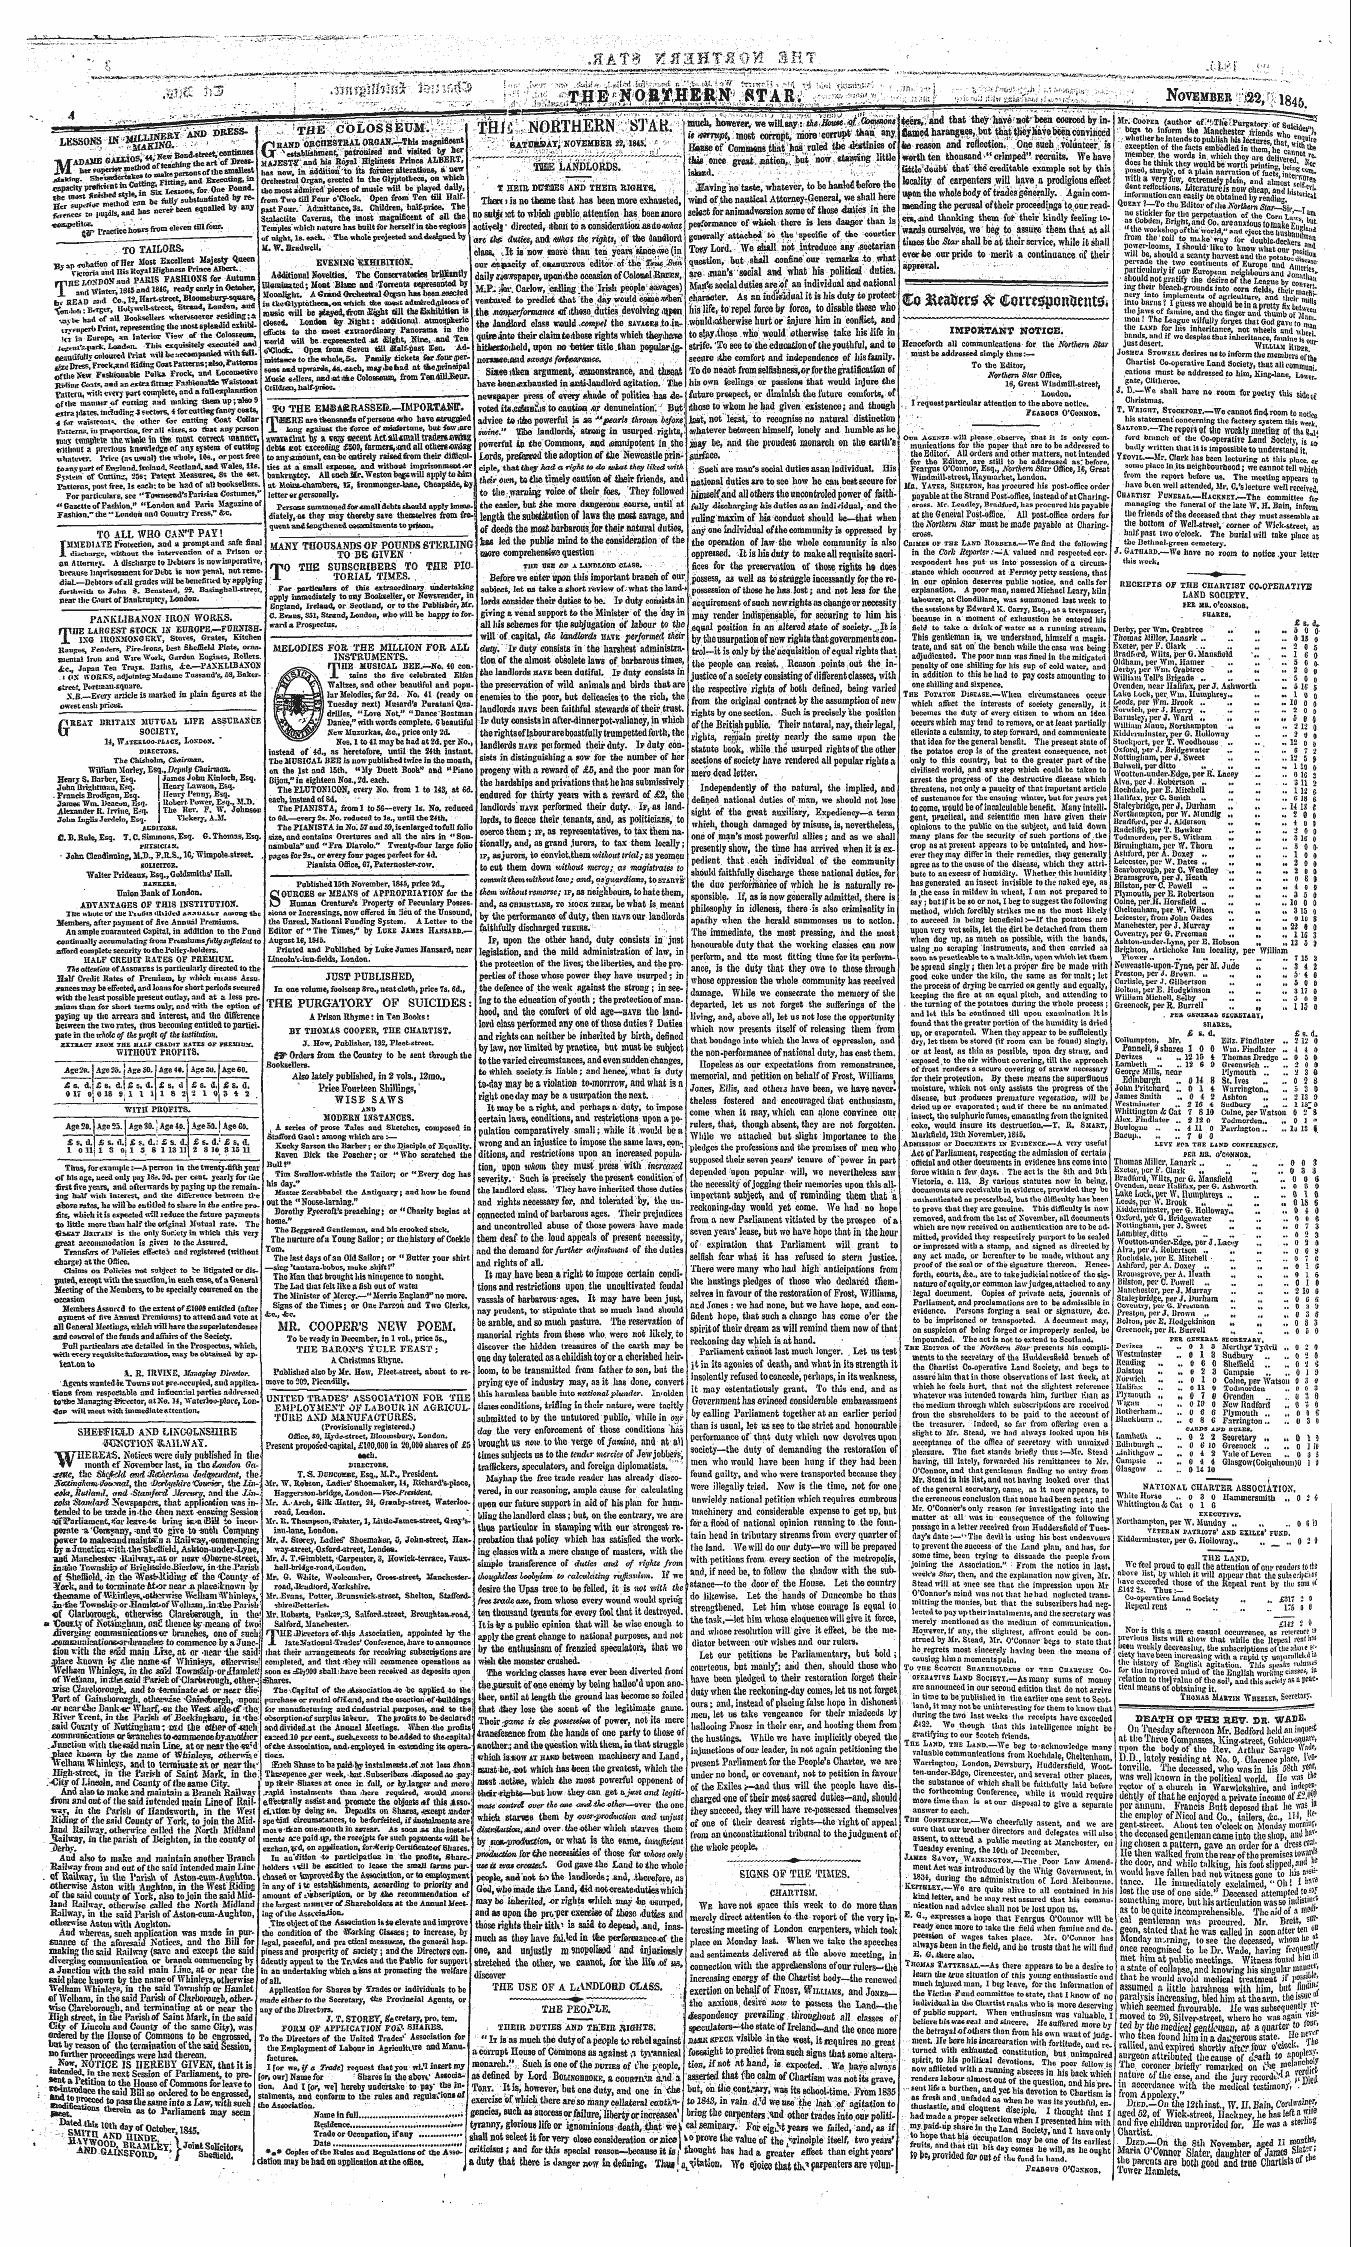 Northern Star (1837-1852): jS F Y, 3rd edition - Ad00422